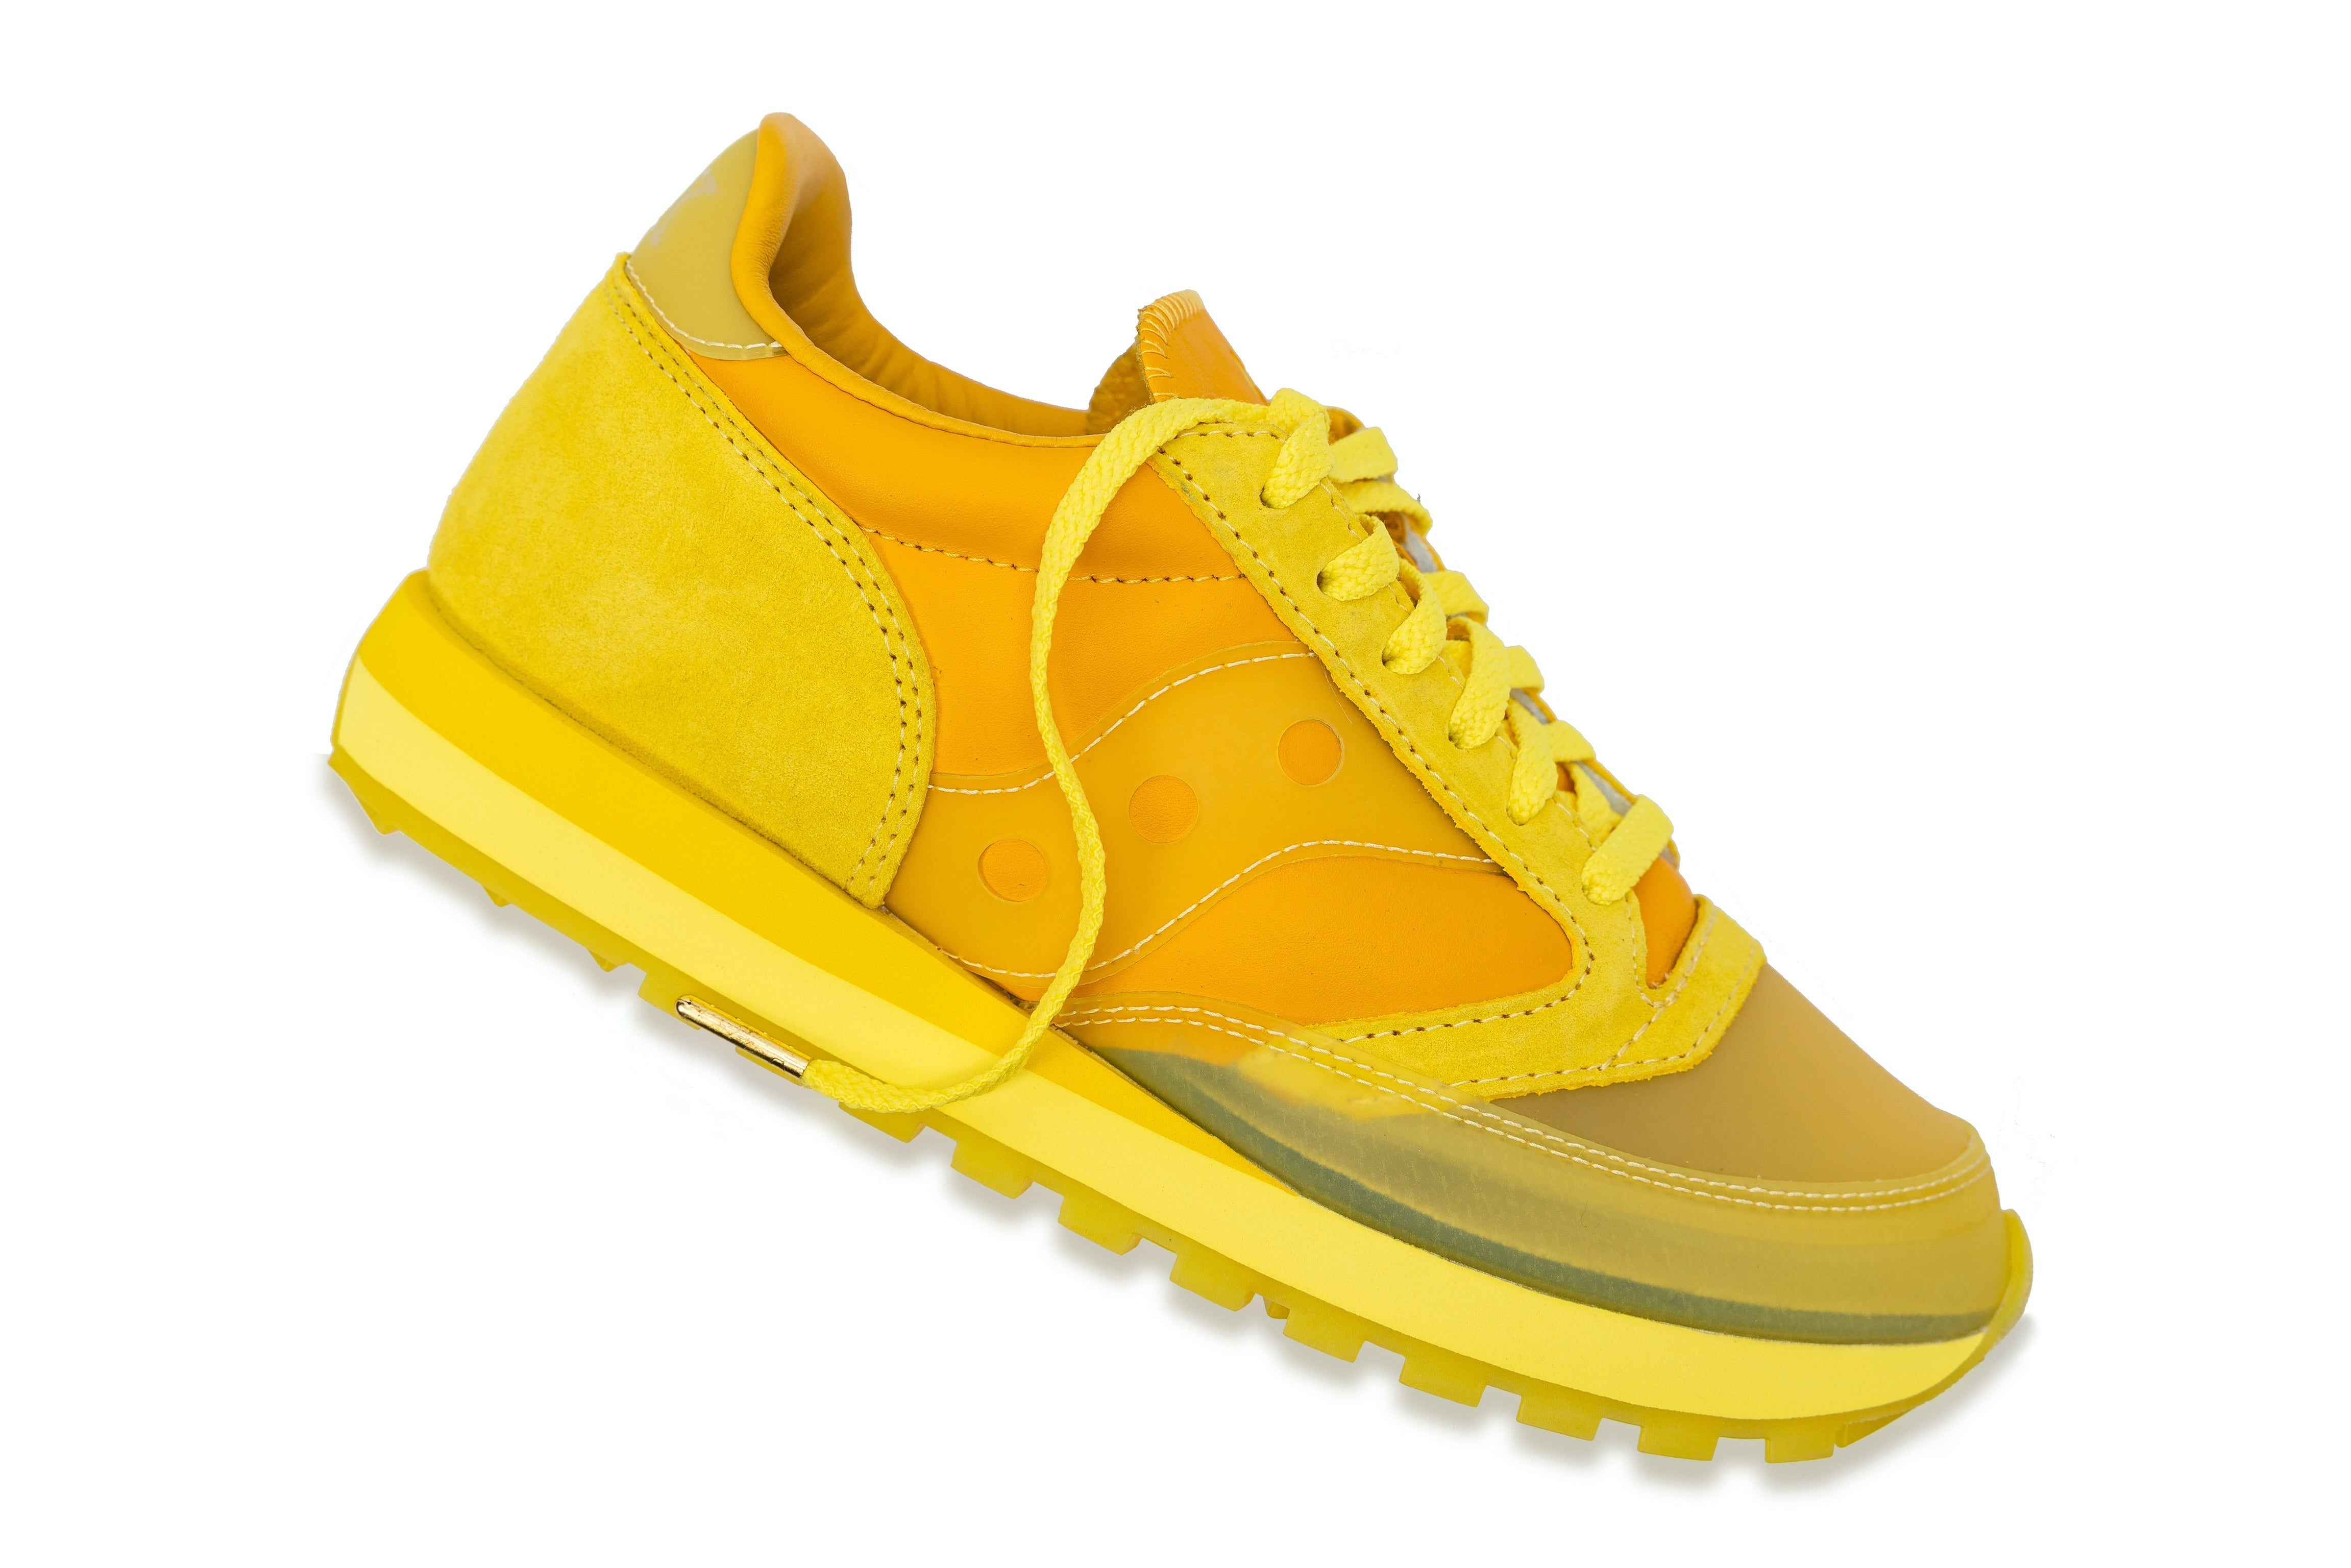 efterklang godkende Æble Hommewrk - Lunch Pail Yellow shoes by Trinidad James X Saucony – HOMMEWRK